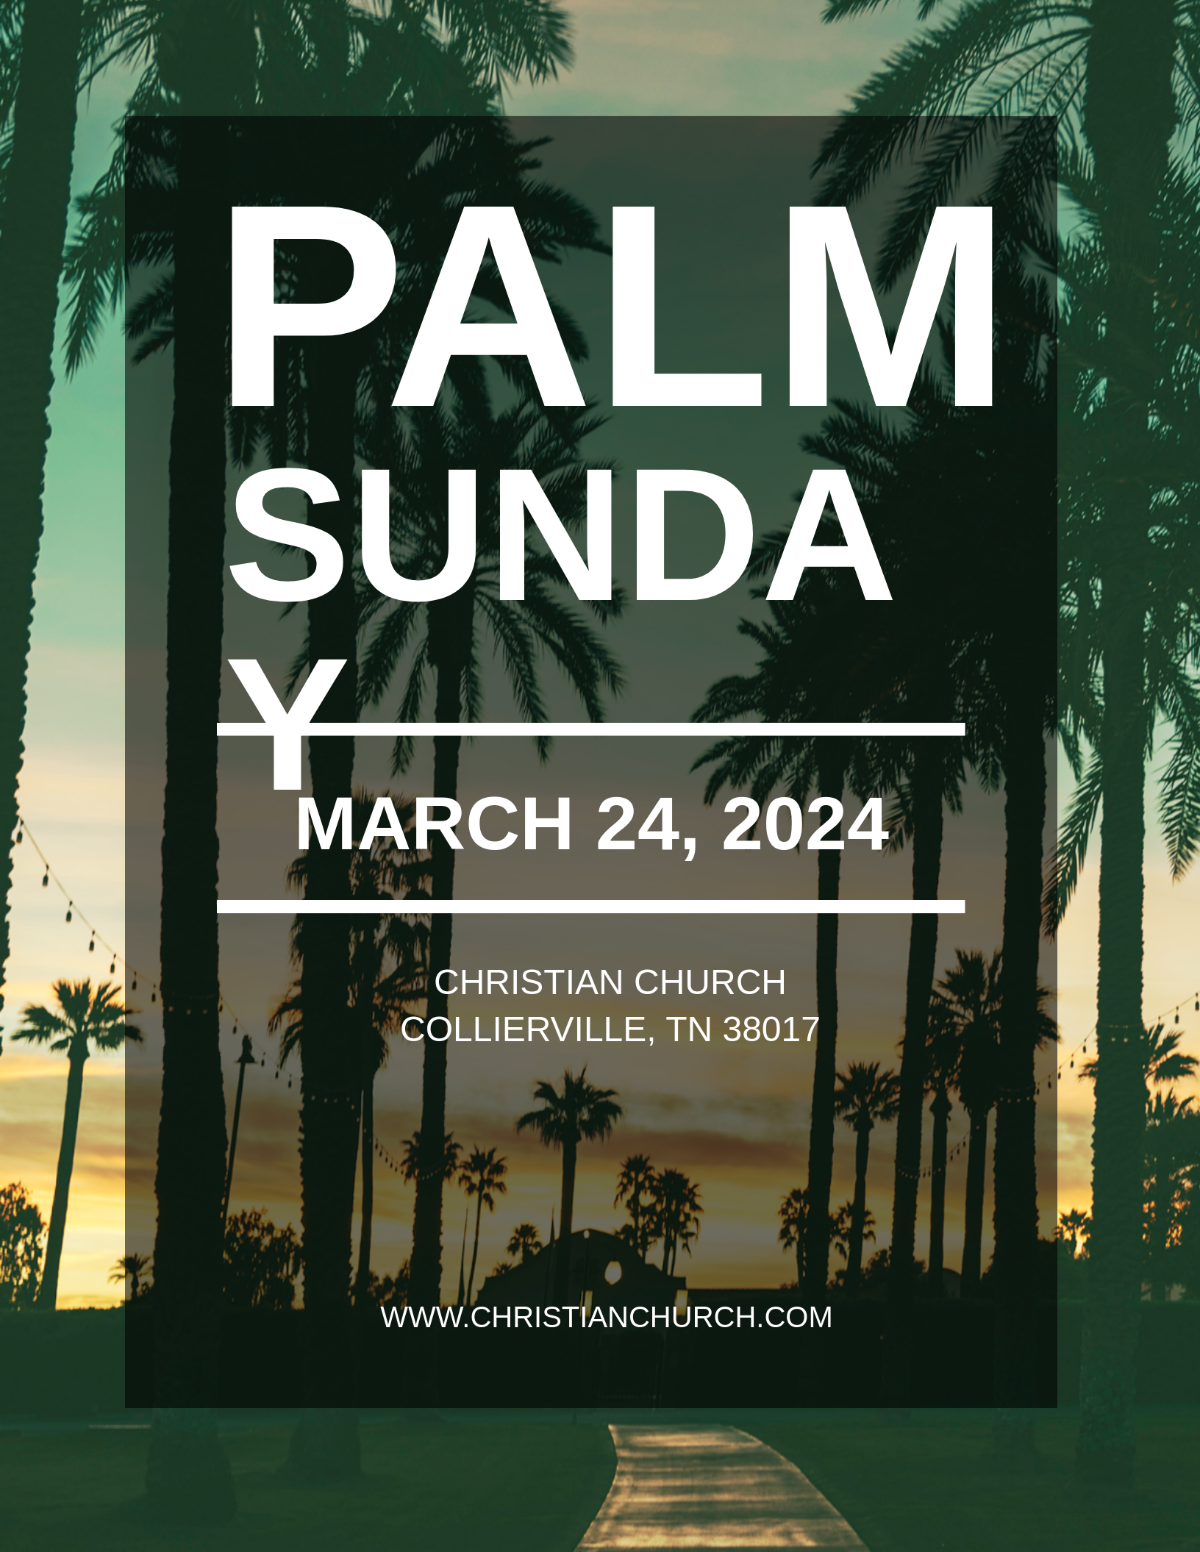 Free Palm Sunday Flyer Template